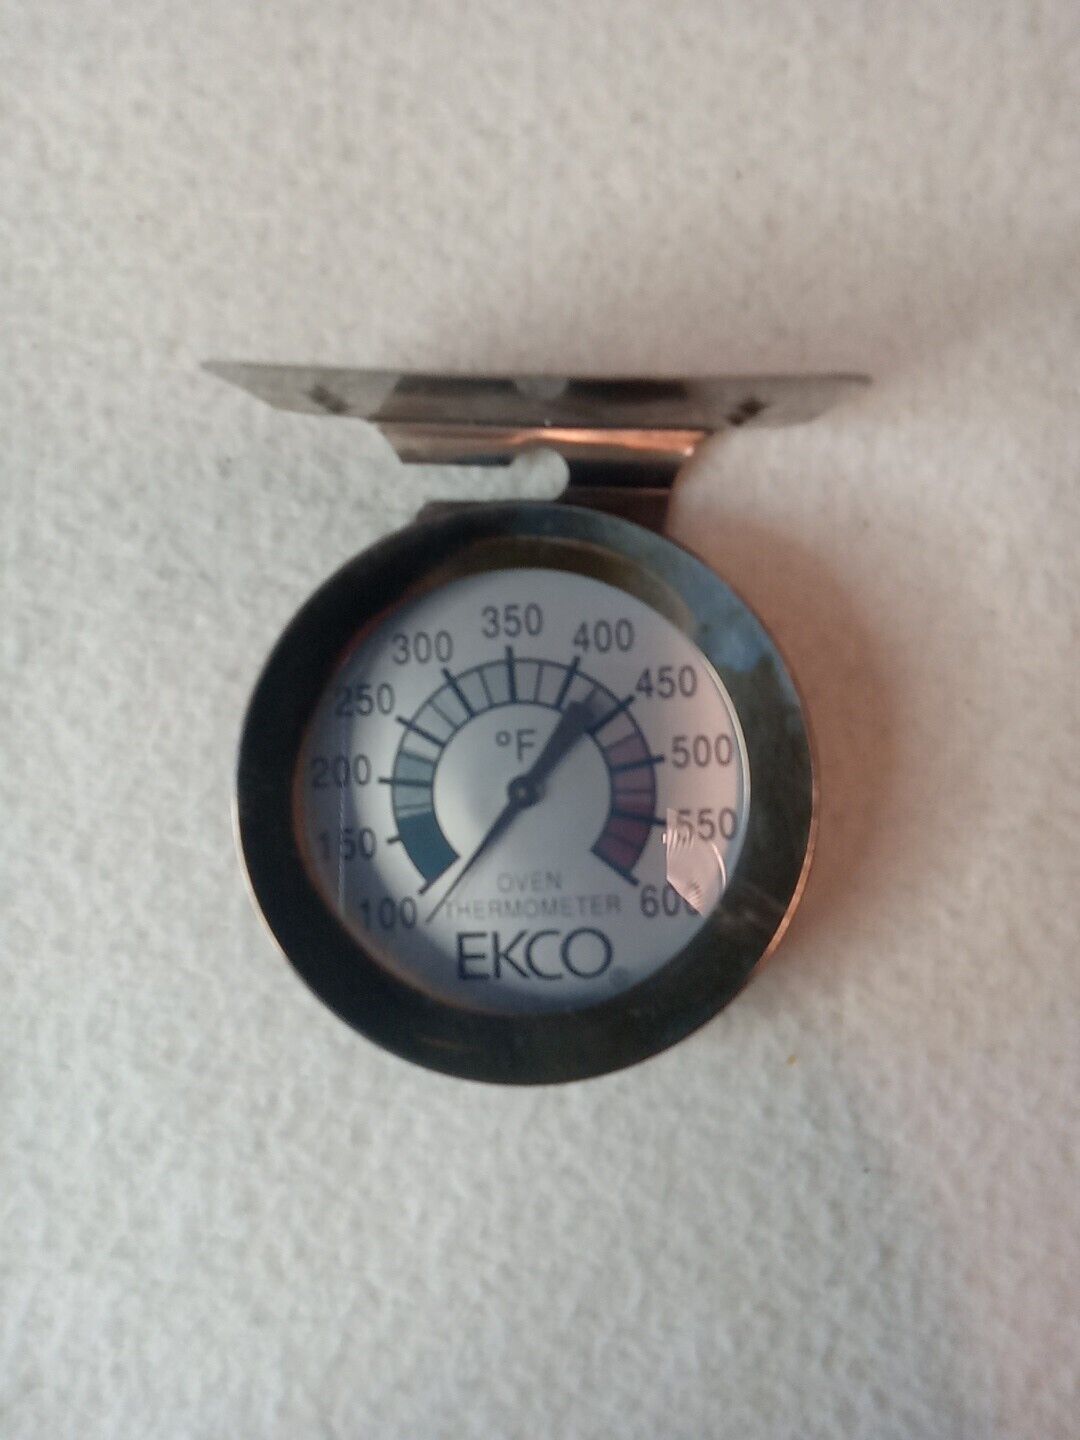 Vintage Ecko Baker’s Secret Deluxe Oven Thermometer, 100 - 600, chrome, 3 in rou